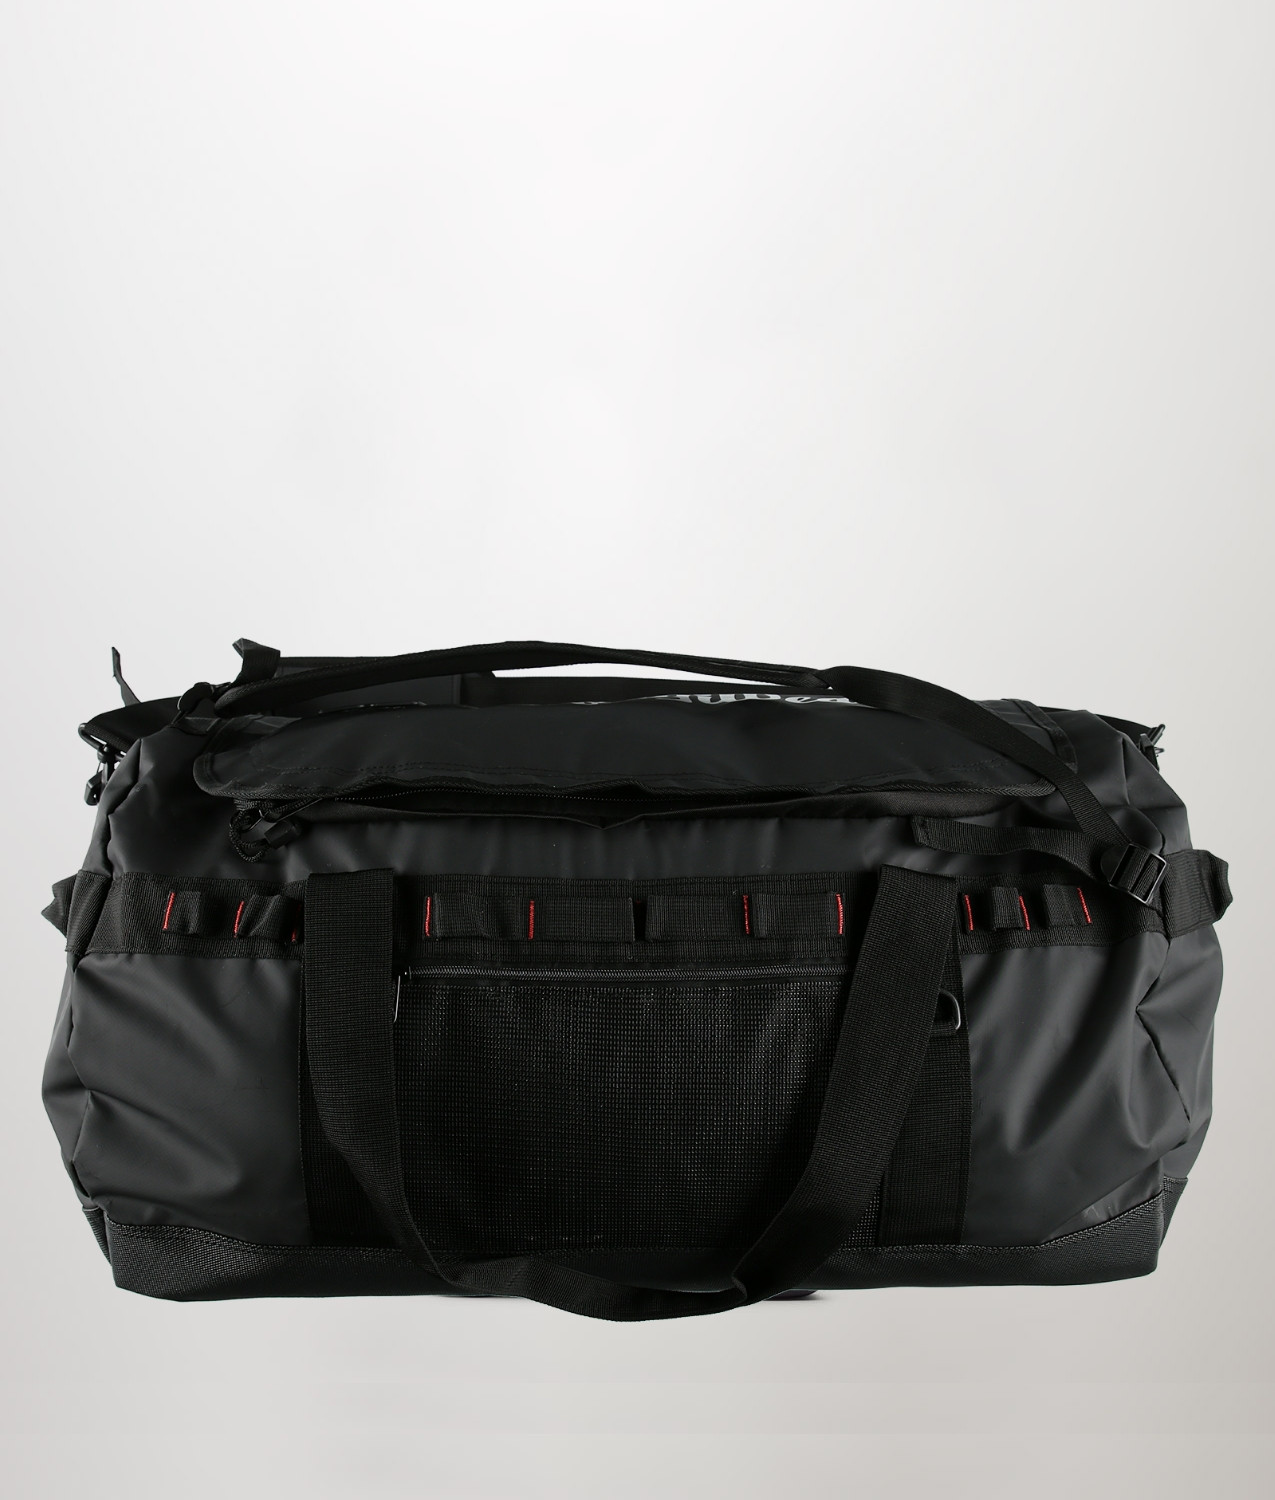 Premium Gear Bag